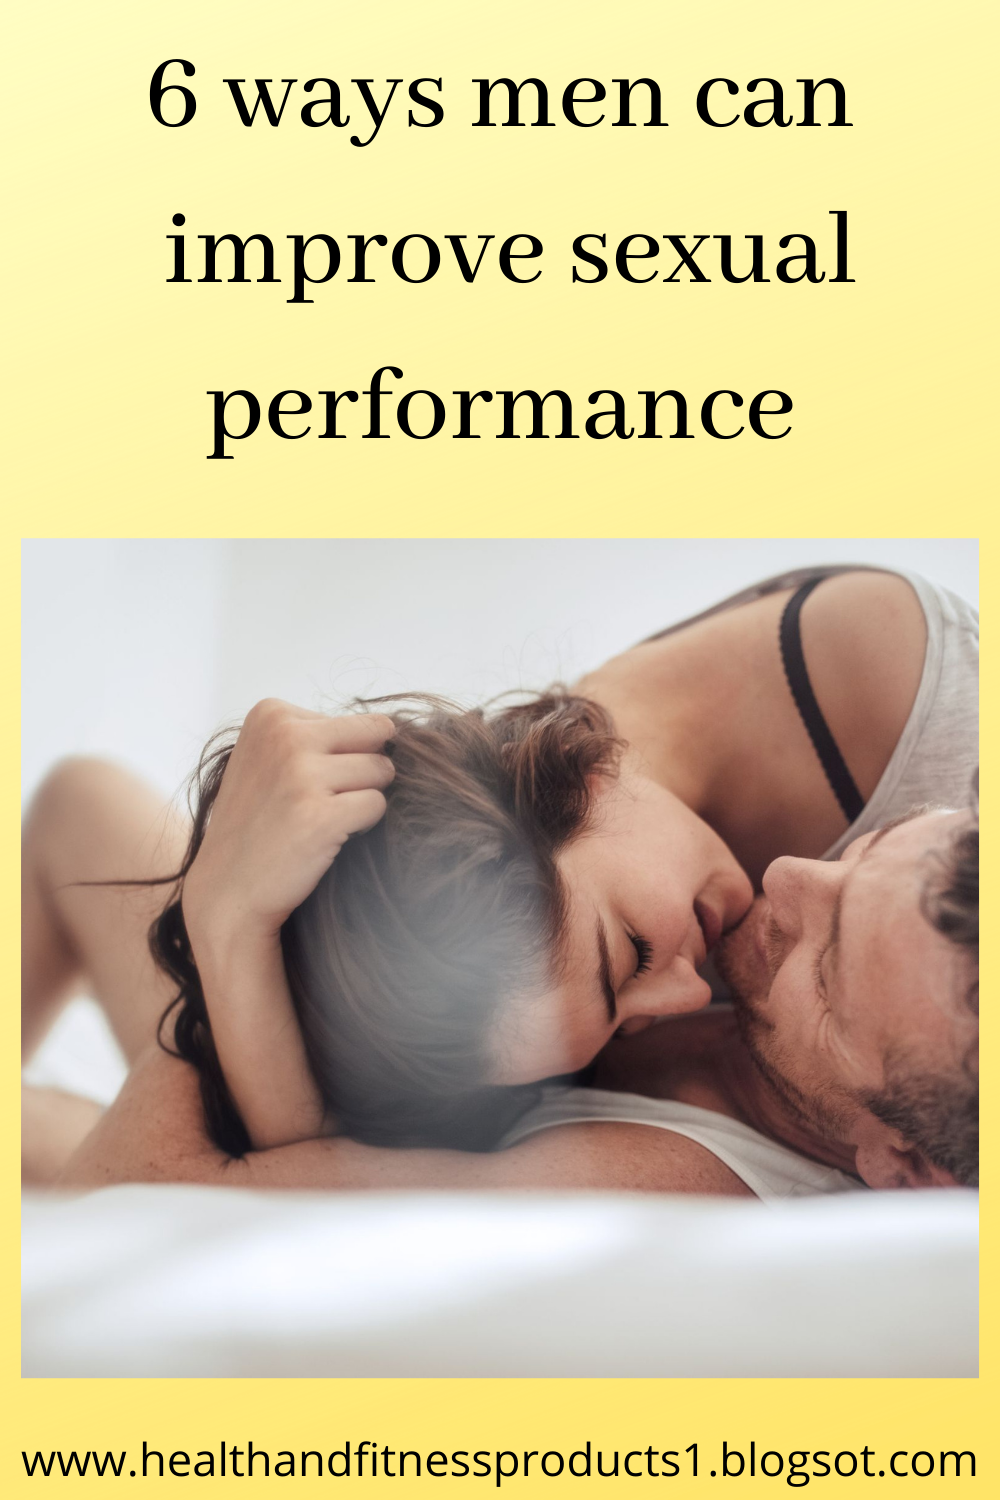 6 Ways Men Can Improve Sexual Performance